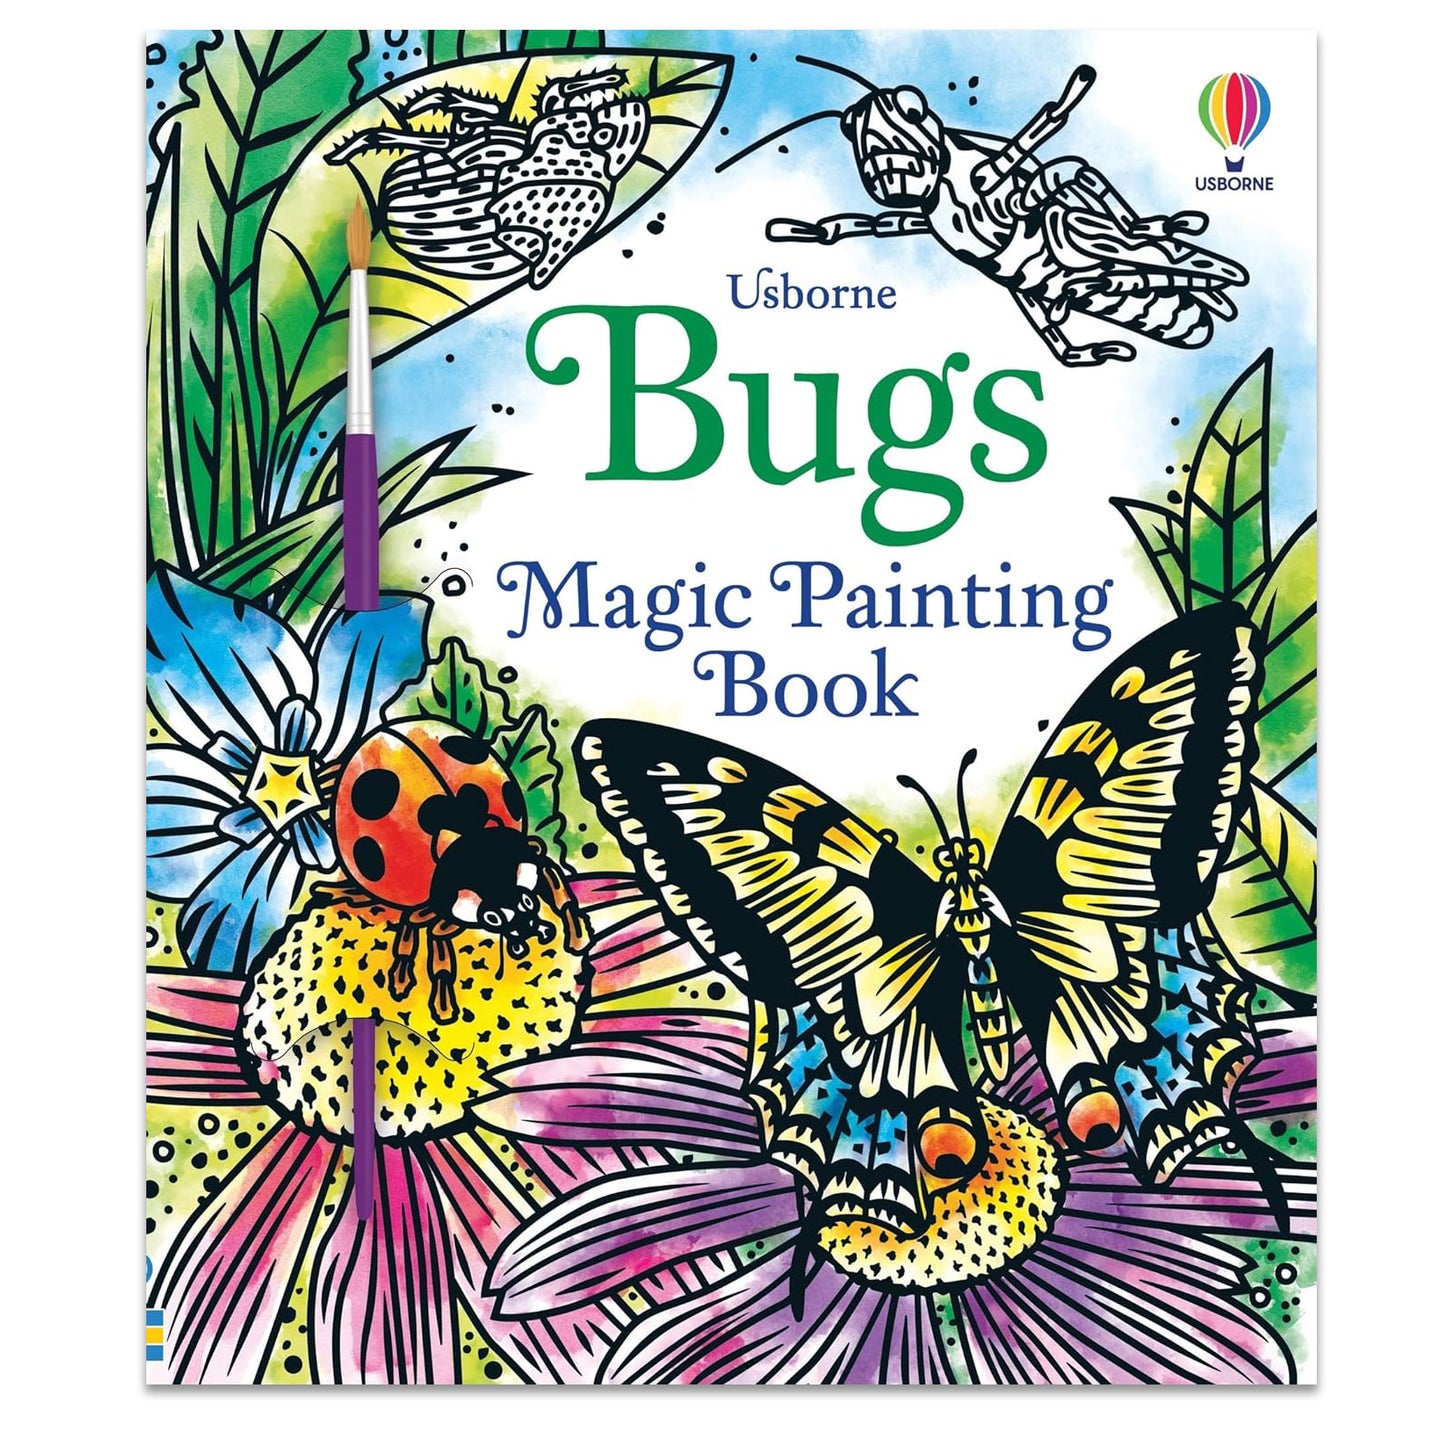 Magic Painting Book: Bugs